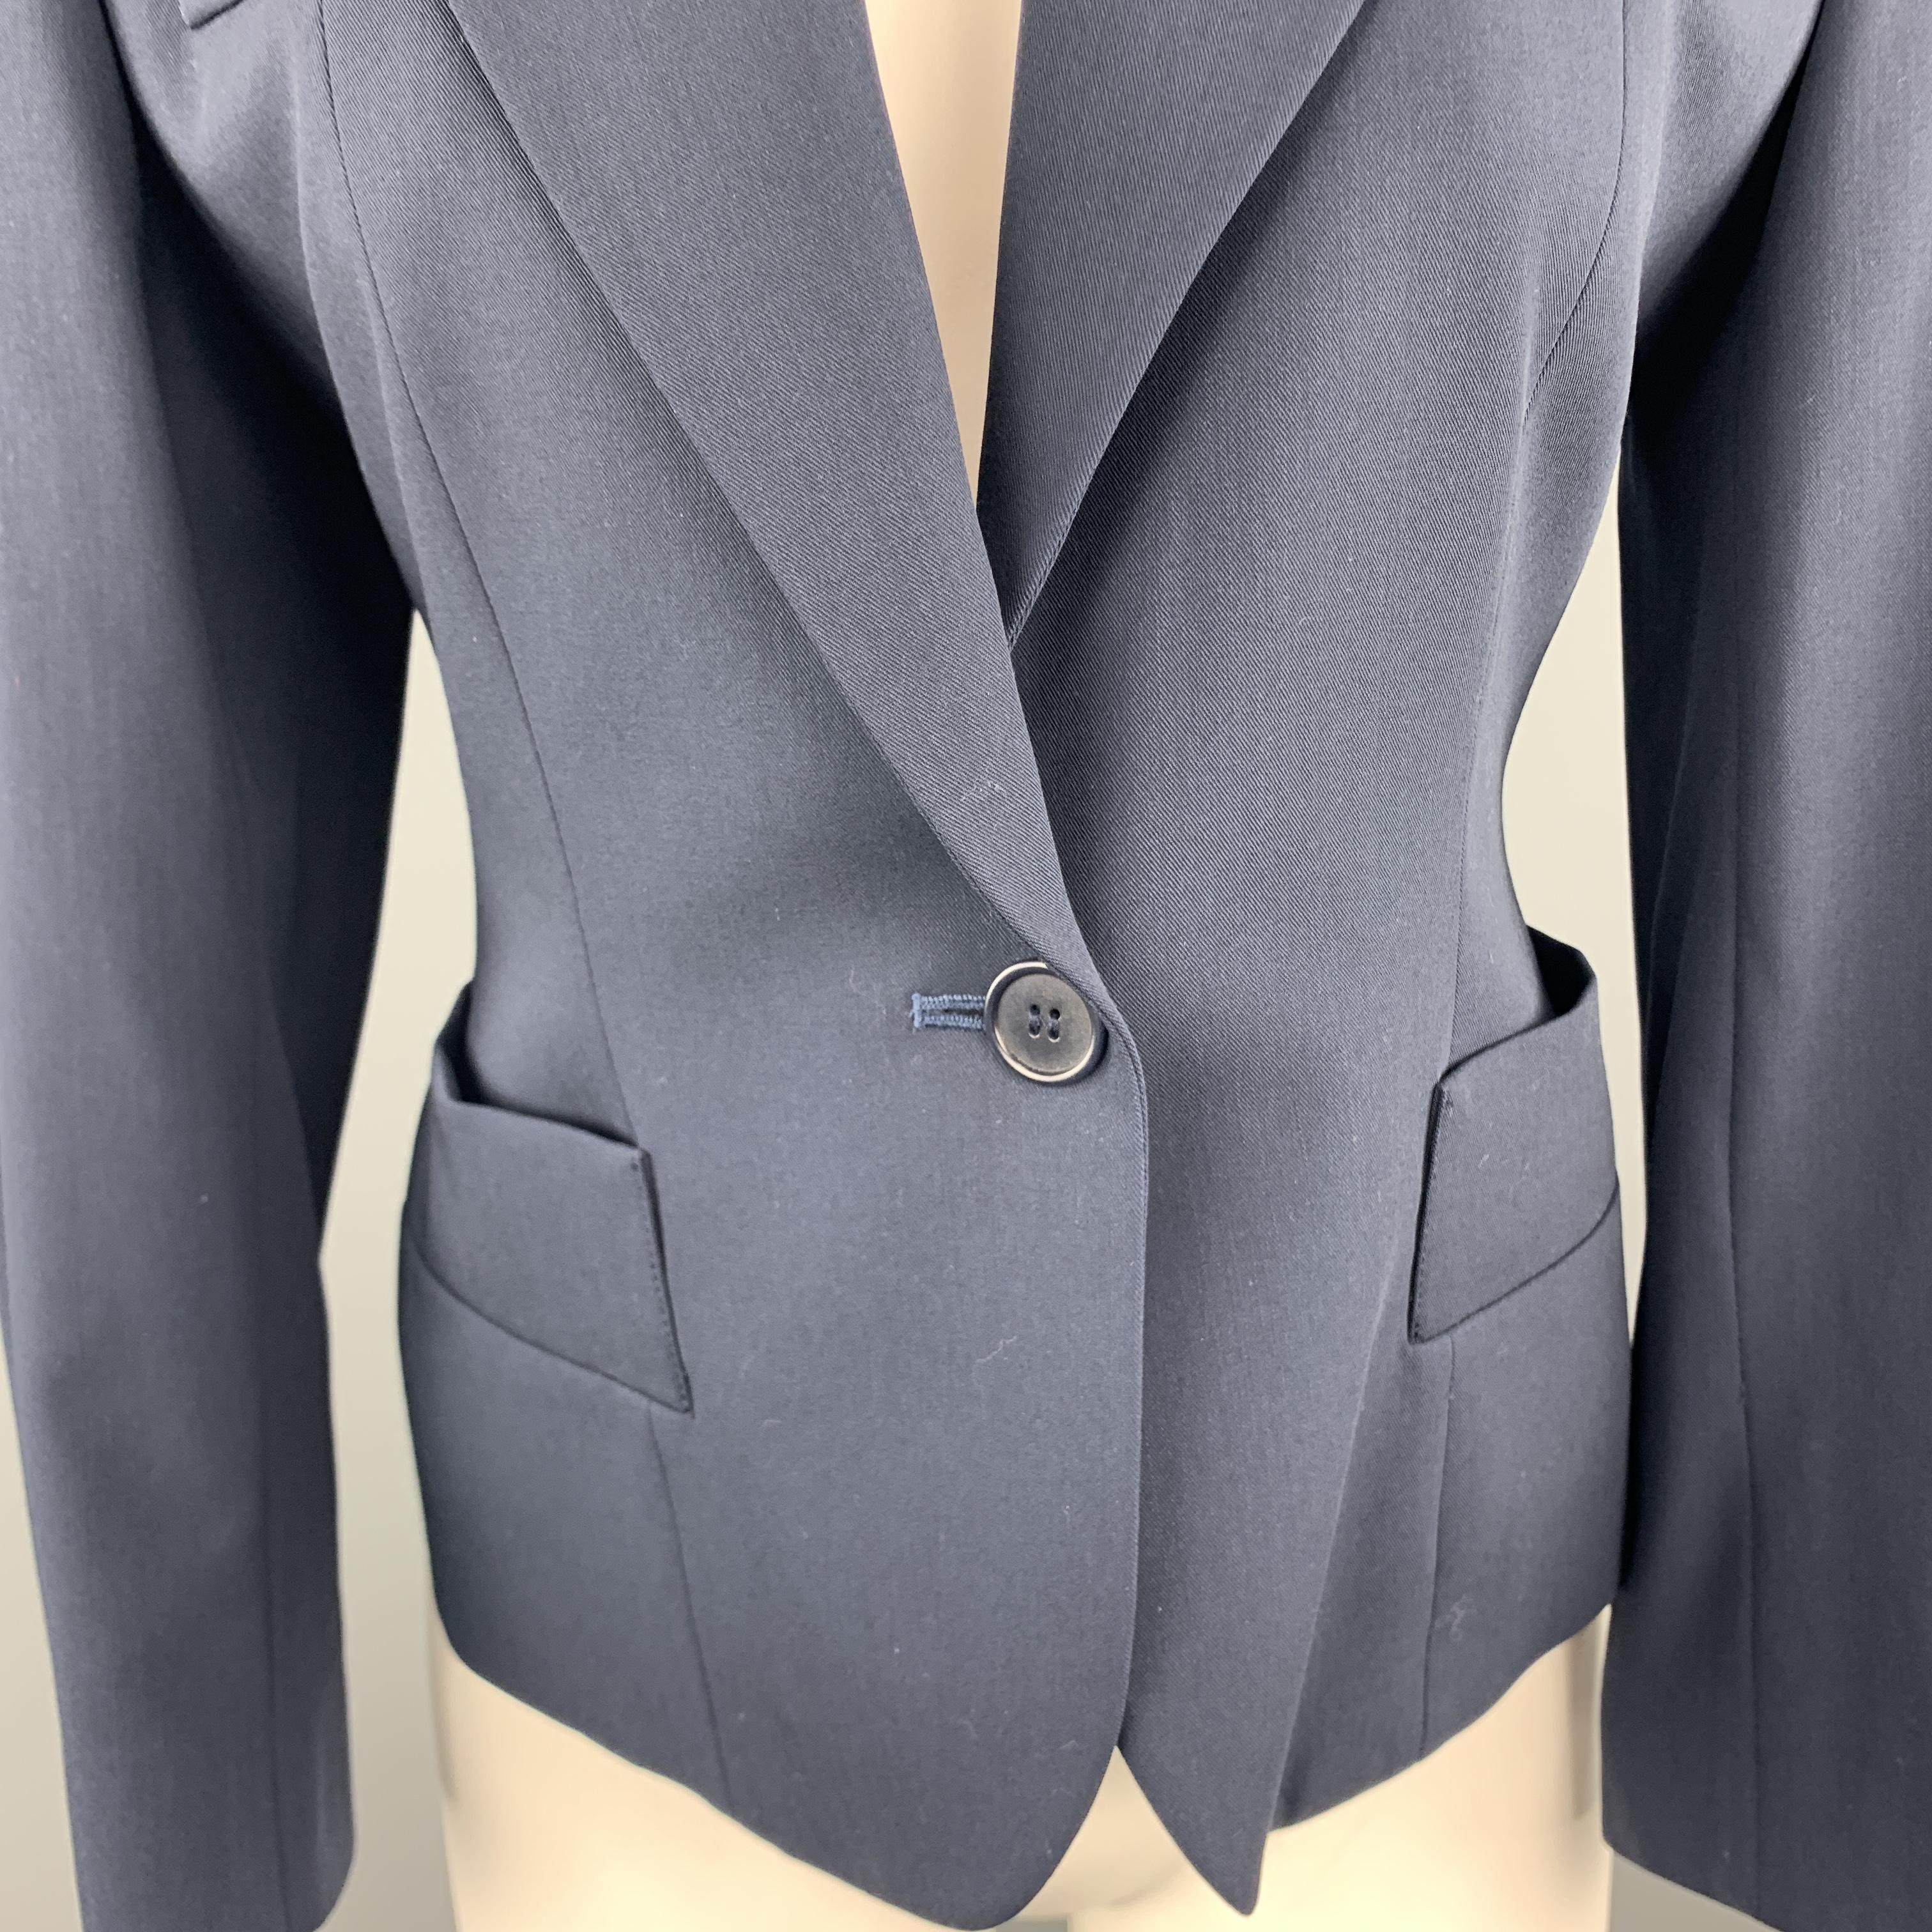 Vintage YVES SAINT LAURENT VARIATIONS blazer comes in navy blue virgin wool with a strong shoulder pocket details, and cropped hem. Made in France.
 
Excellent Pre-Owned Condition.
Marked: FR 38 / 6
 
Measurements:
 
Shoulder: 16 in.
Bust: 36